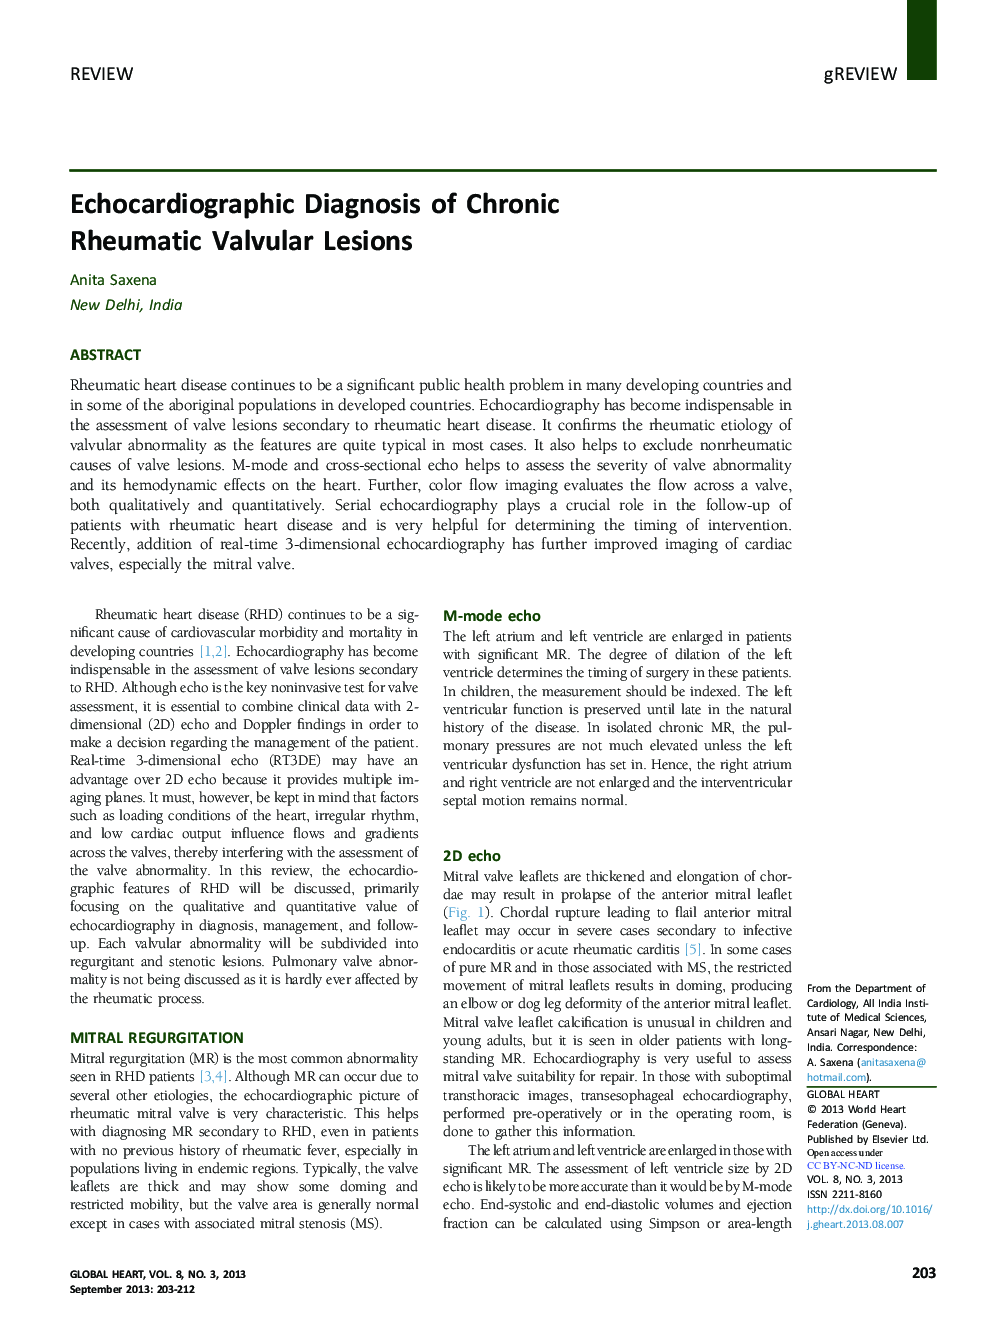 Echocardiographic Diagnosis of Chronic Rheumatic Valvular Lesions